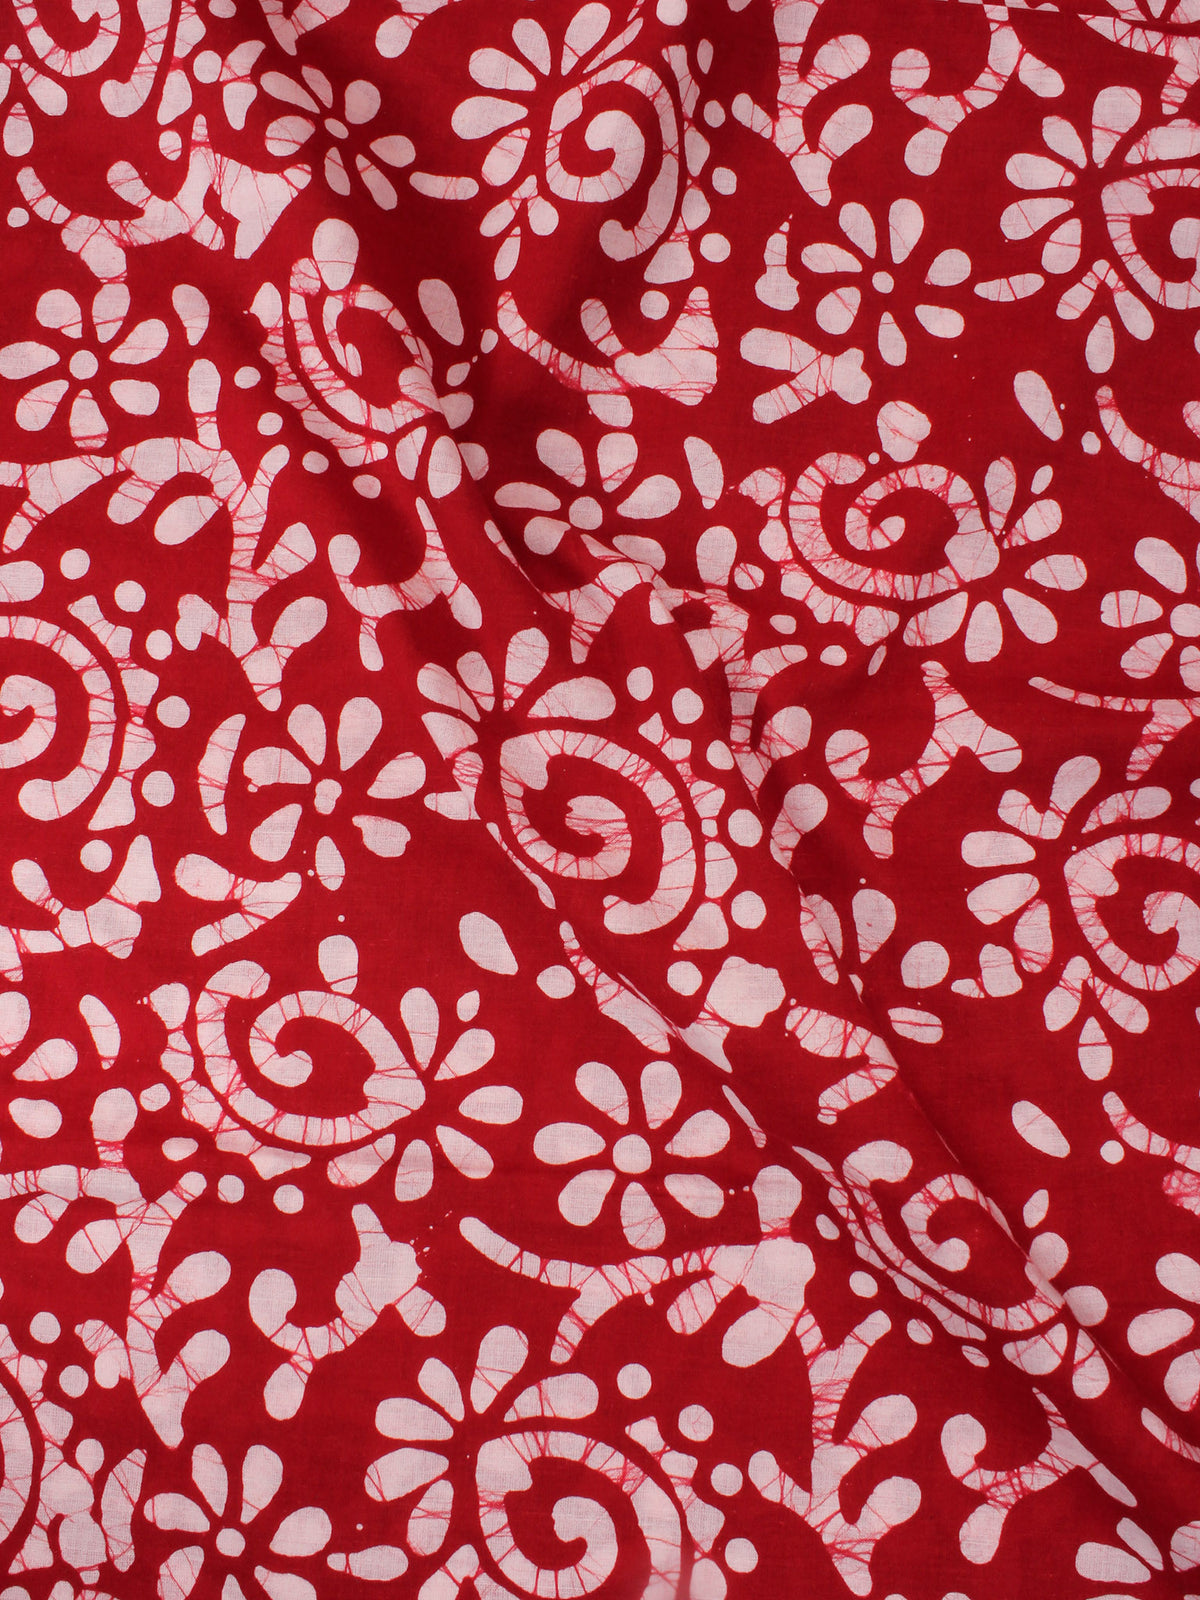 Red White Hand Block Printed Cotton Fabric Per Meter - F0916338